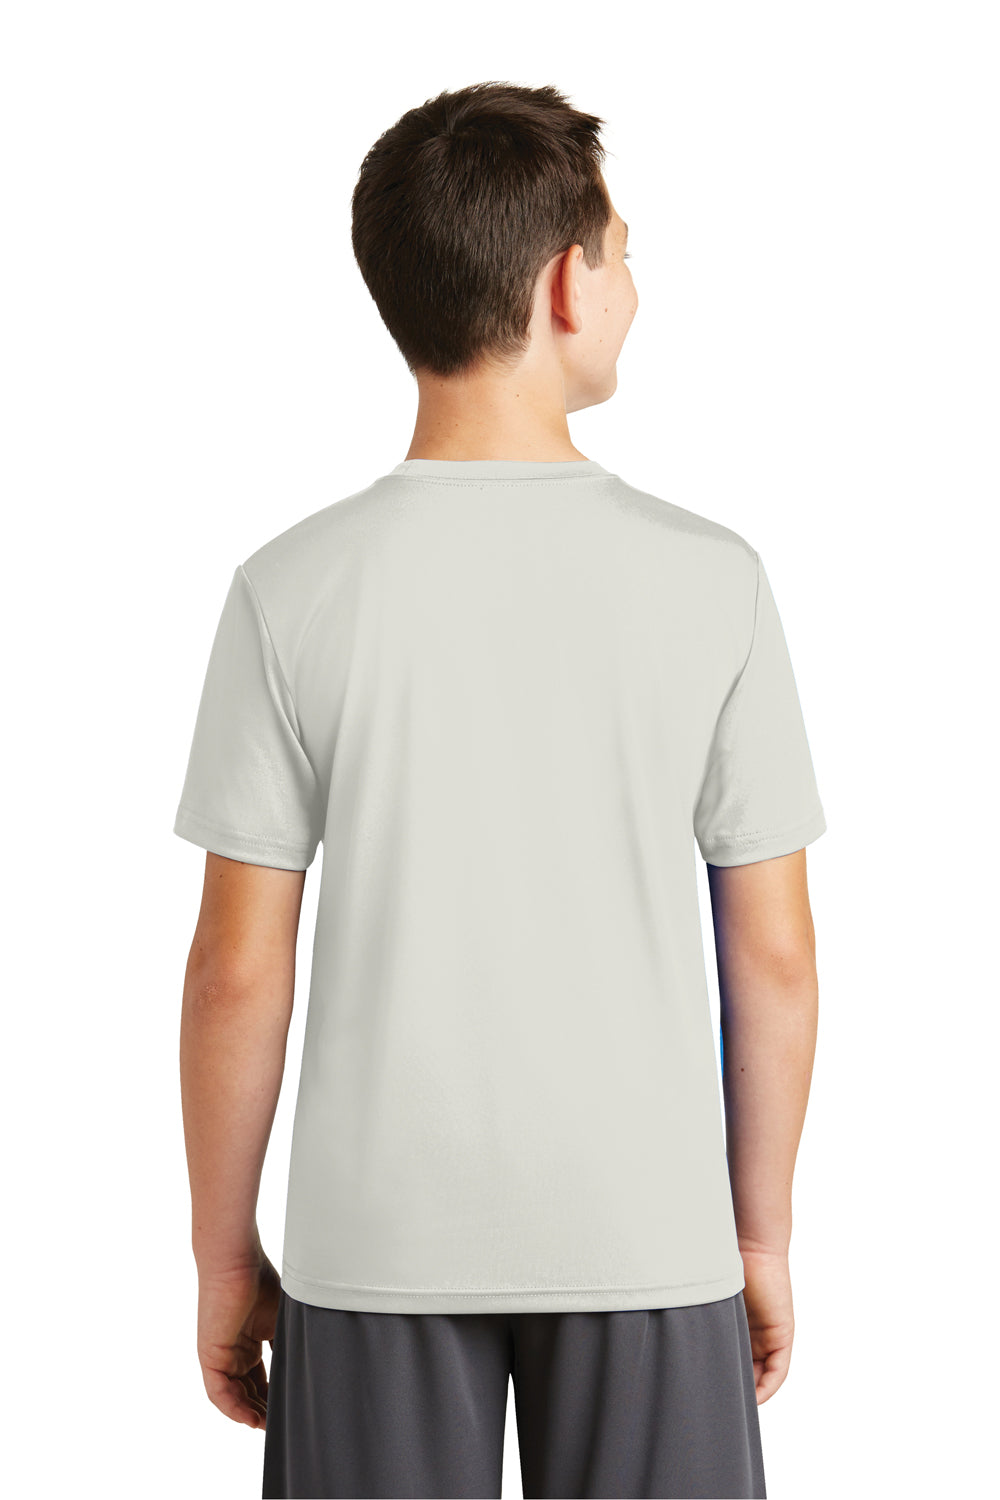 Sport-Tek YST320 Youth Tough Moisture Wicking Short Sleeve Crewneck T-Shirt Silver Grey Back